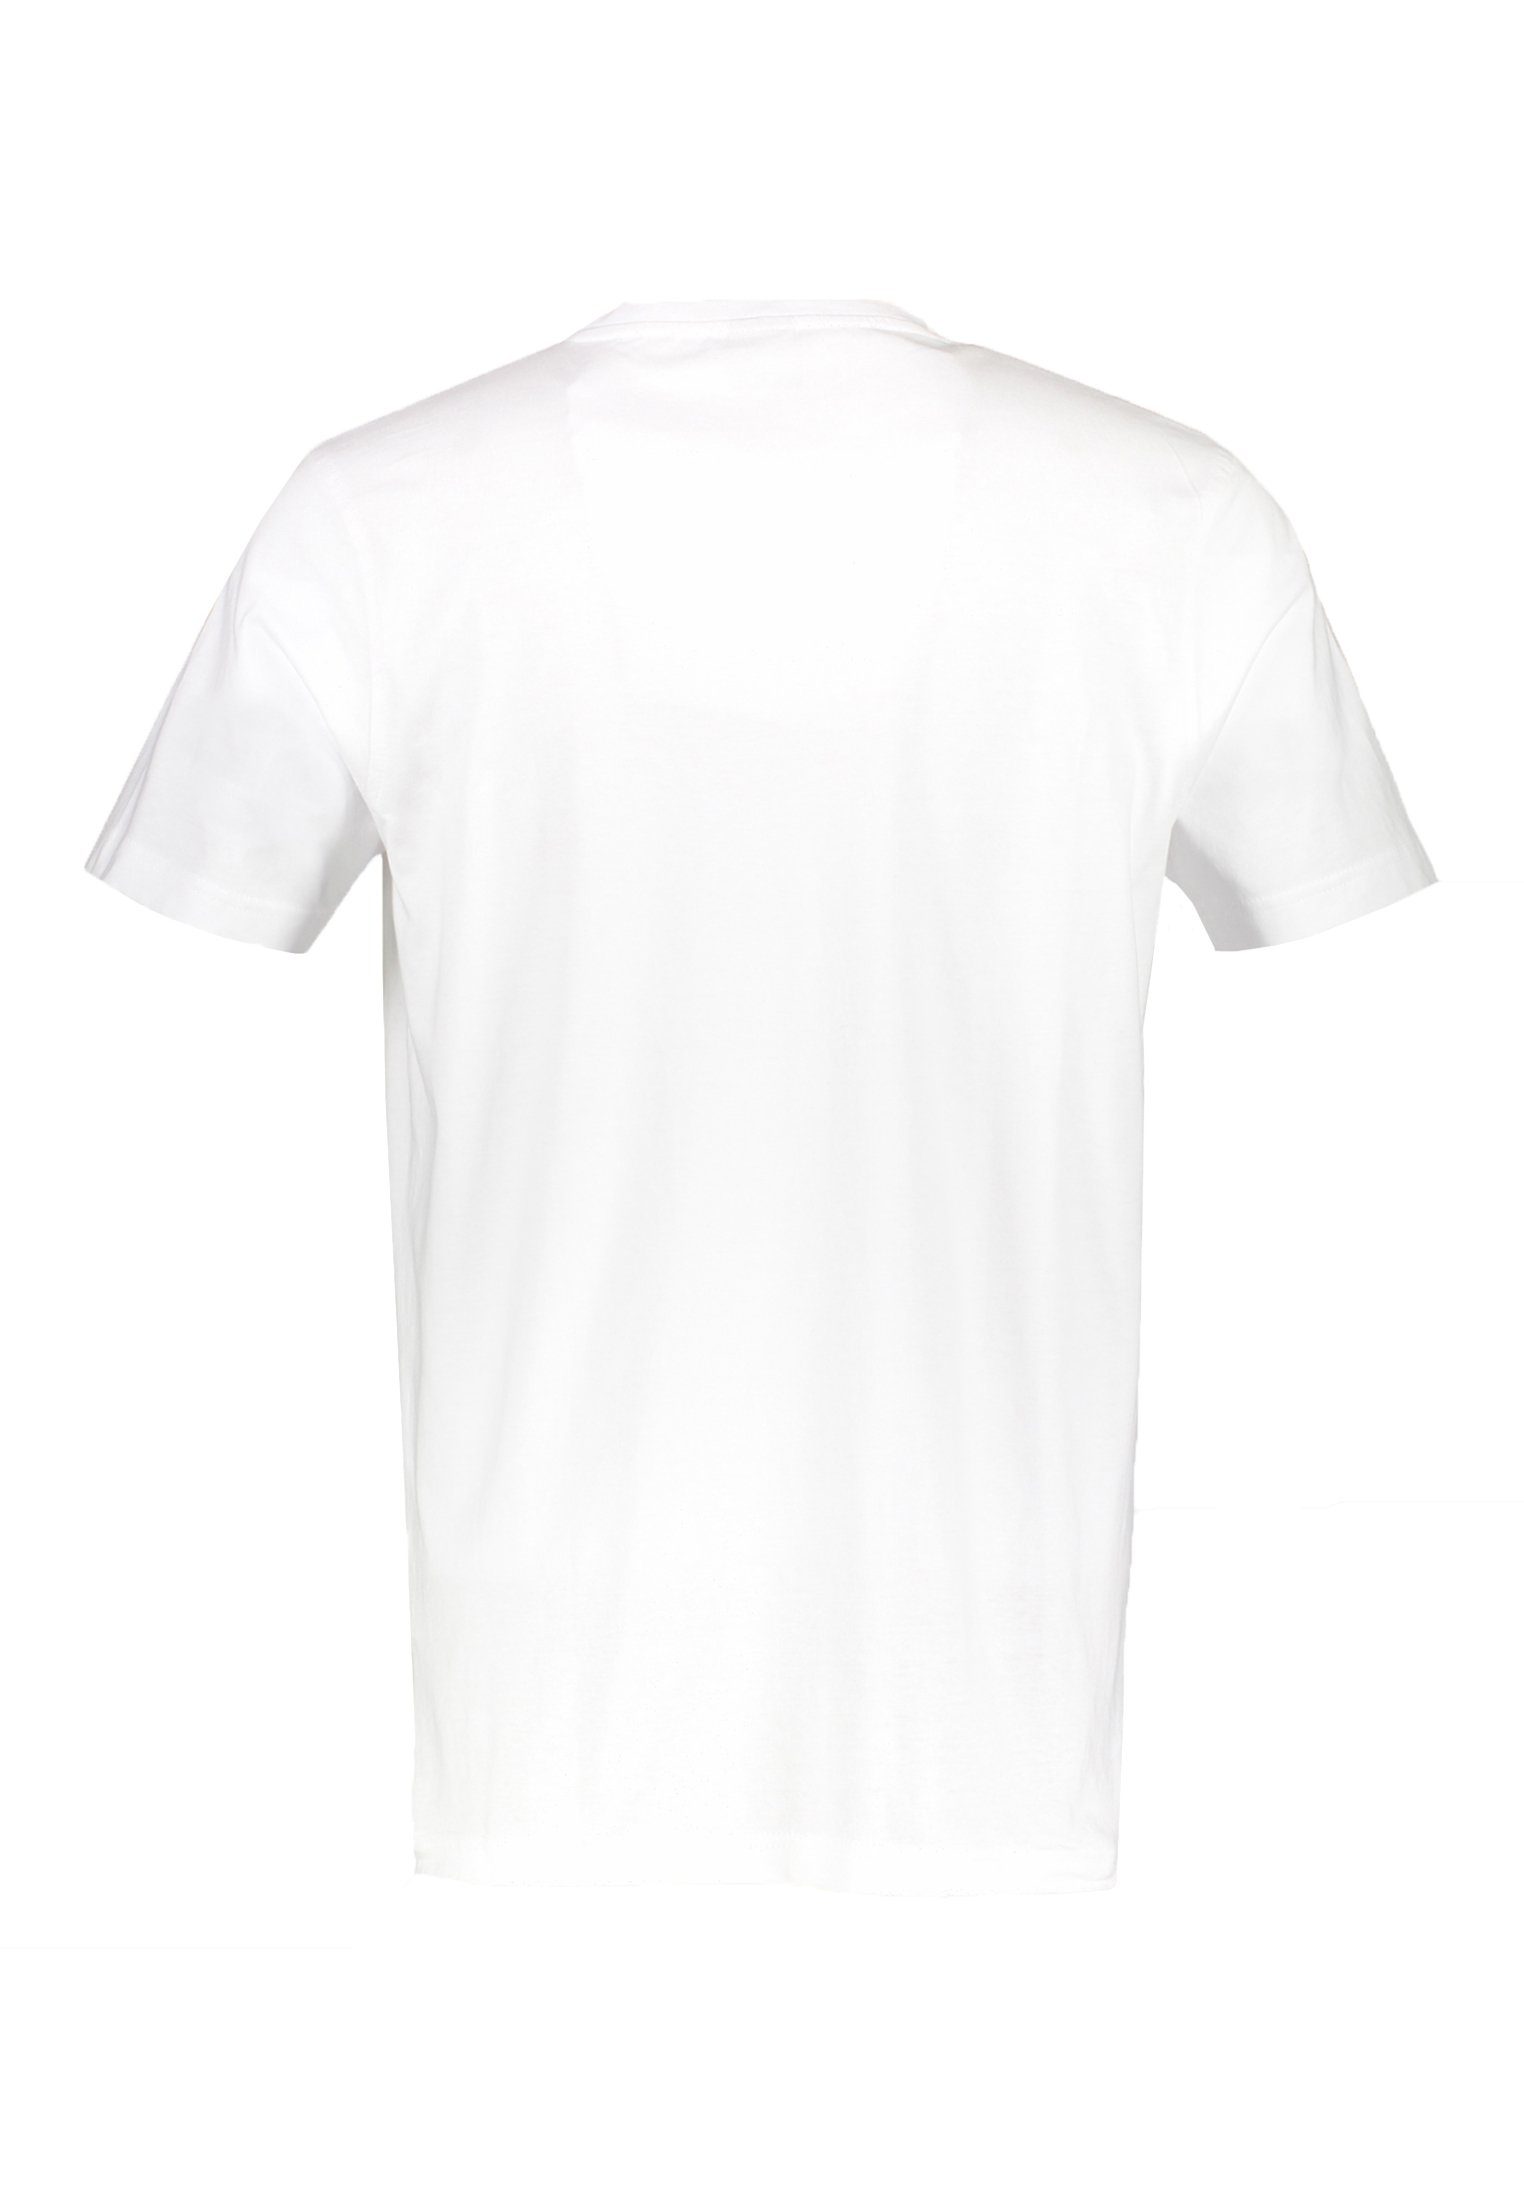 LERROS T-Shirt V-Ausschnitt Weiß LERROS Doppelpack T-Shirt